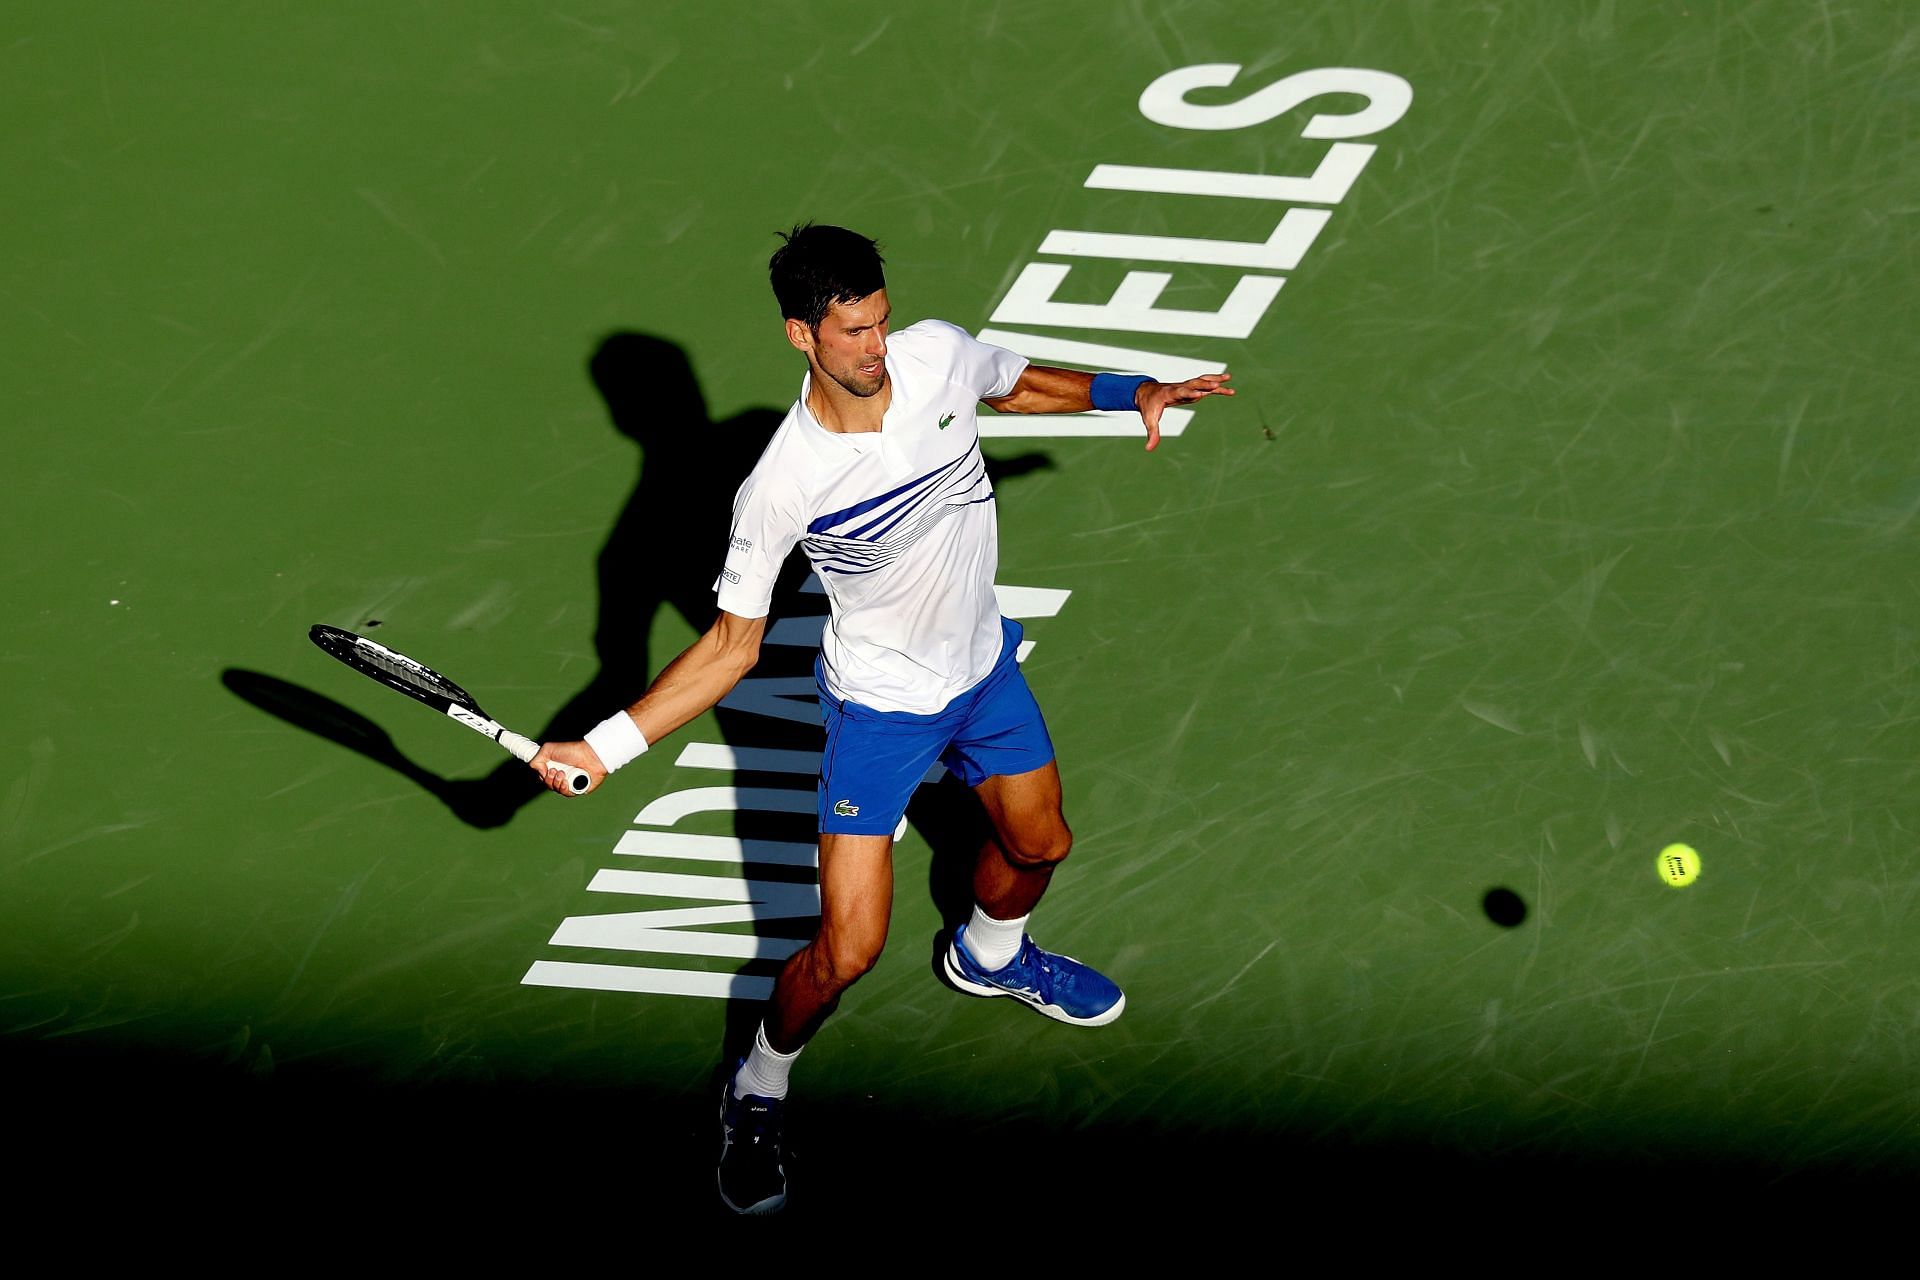 Djokovic at the 2019 BNP Paribas Open